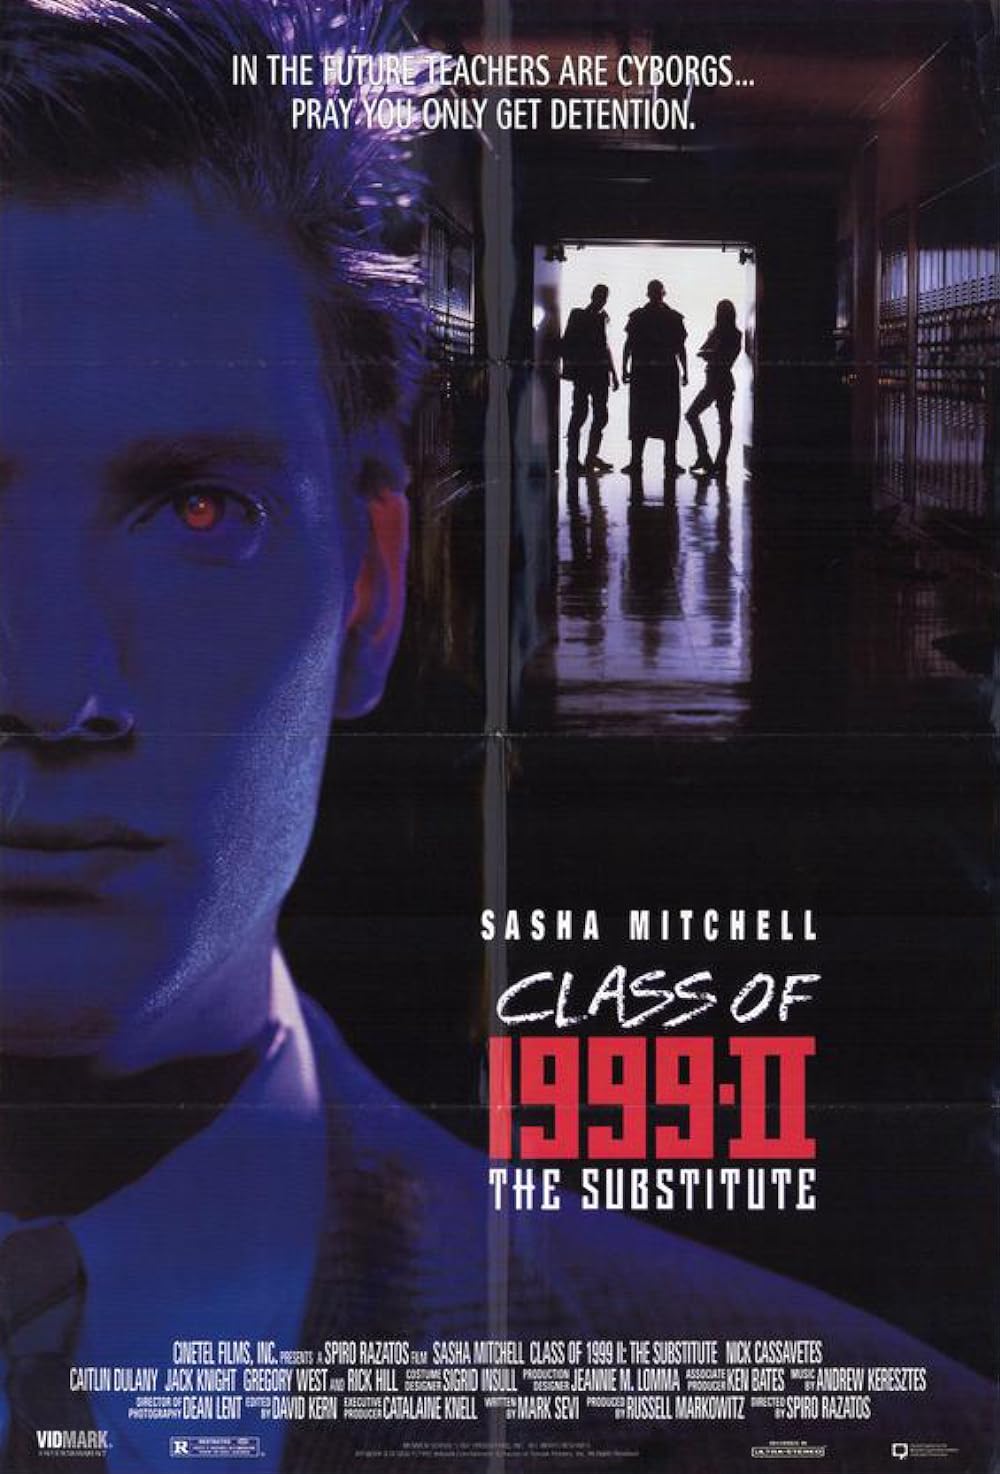 Класс 1999: Новый учитель / Class of 1999 II: The Substitute  (1994) DVDRip